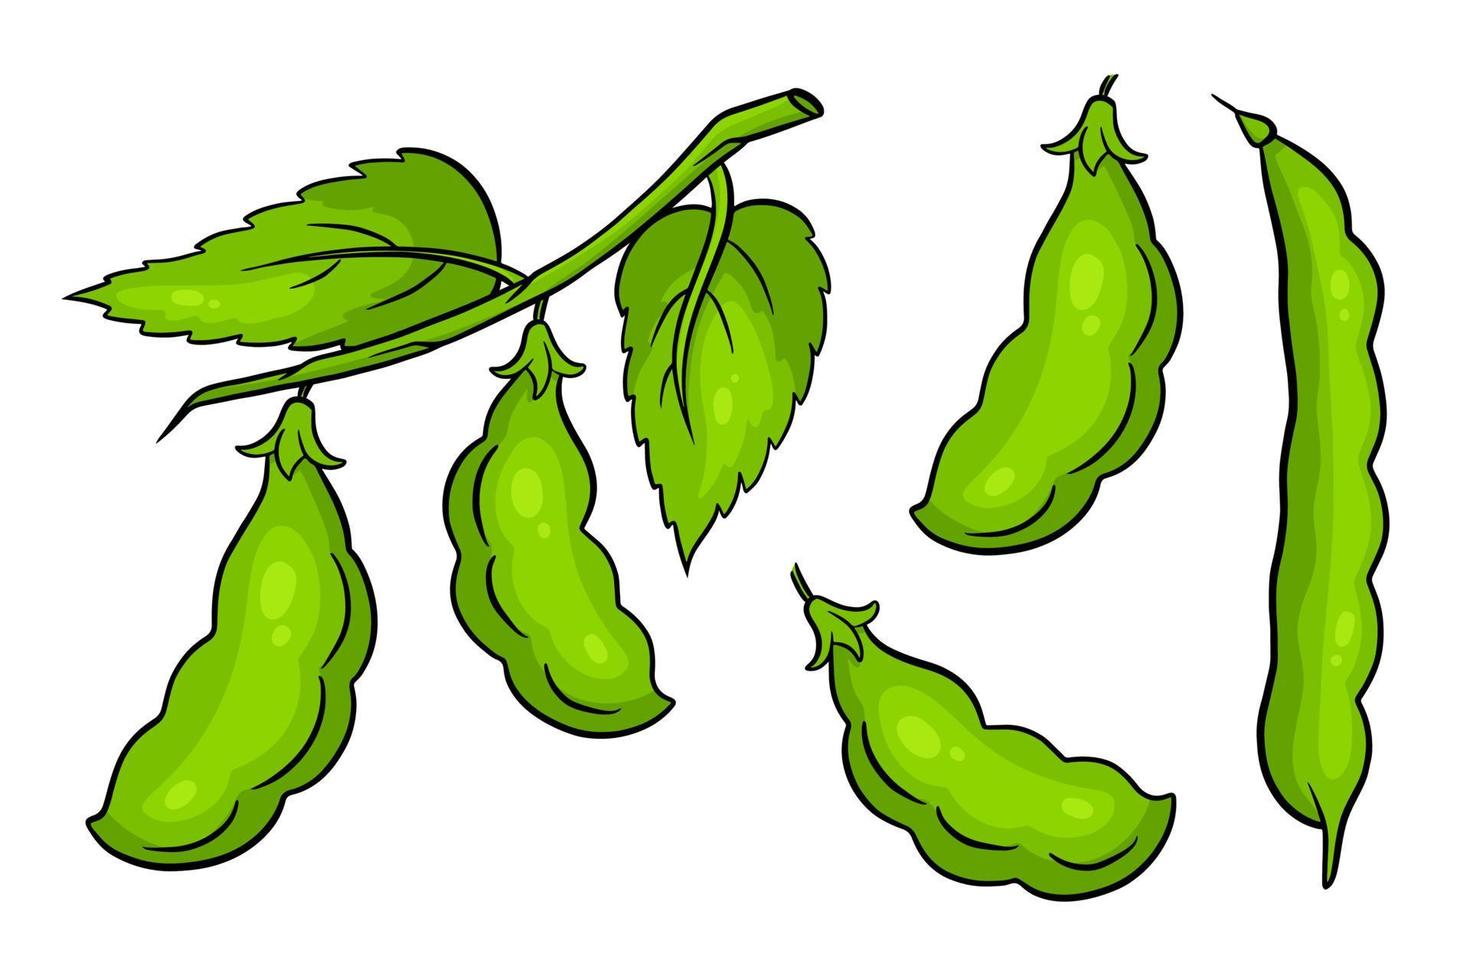 Beans set. Fresh green beans. In a cartoon style. vector